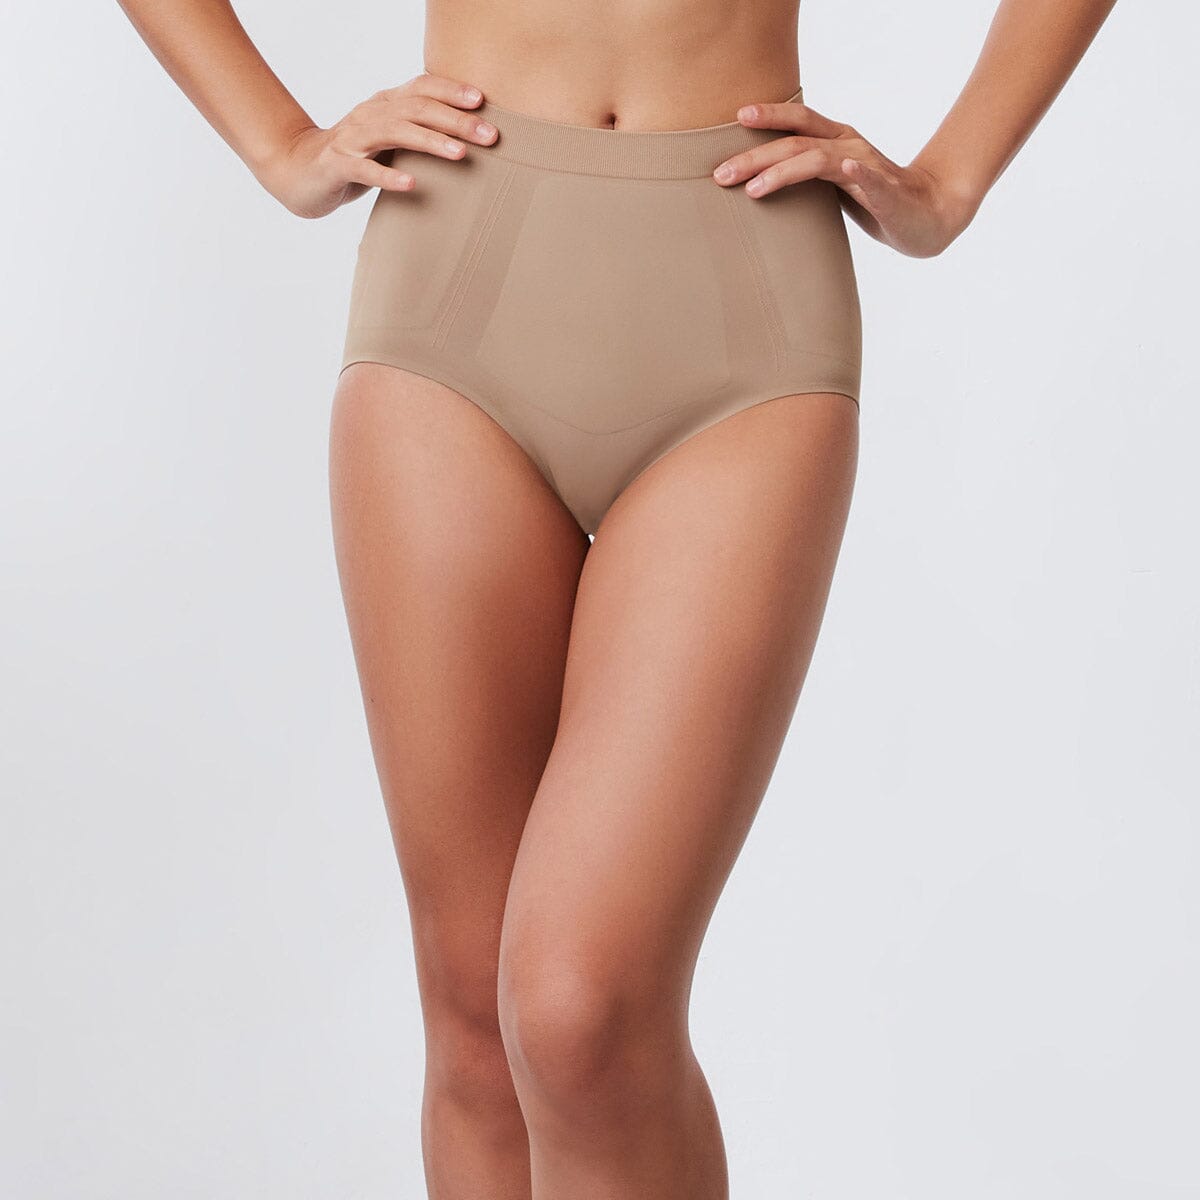 SG SELLER - NEW Women Super HIGH WAIST Slimming Shaping Underwears - Body  Shaper Tummy Control Waistline Inches OFF